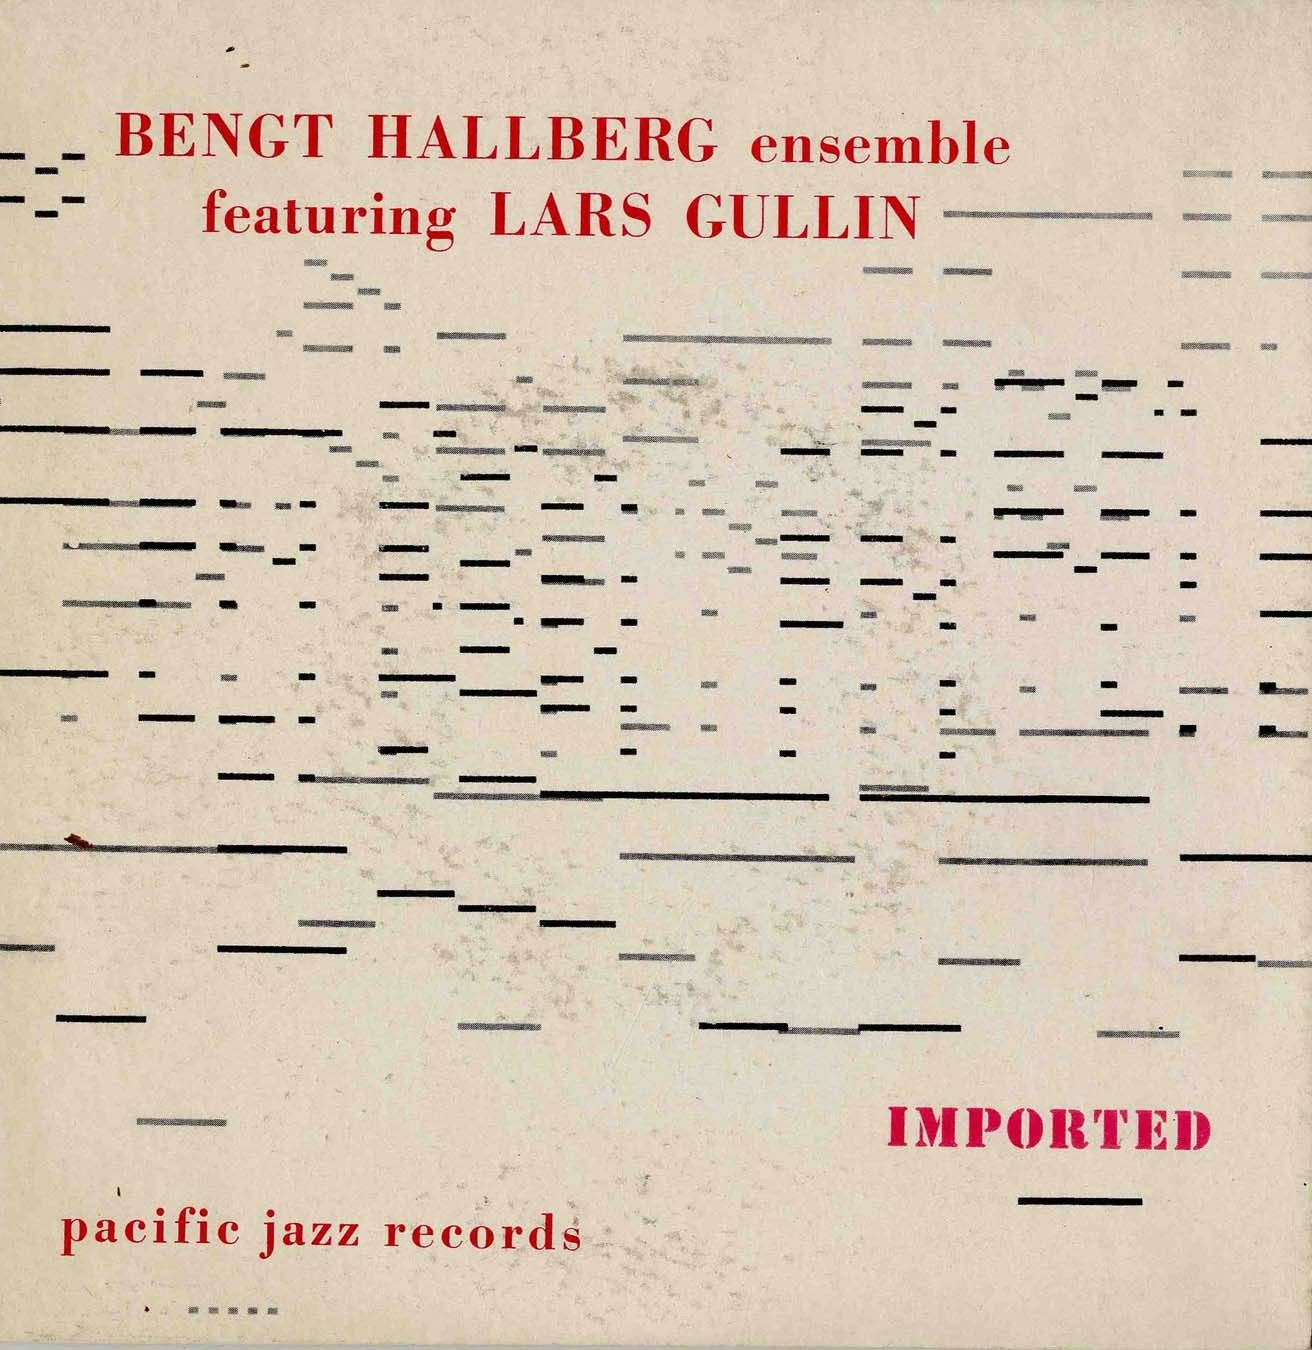 BENGT HALLBERG - Bengt Hallberg Orchestra feat. Lars Gullin cover 